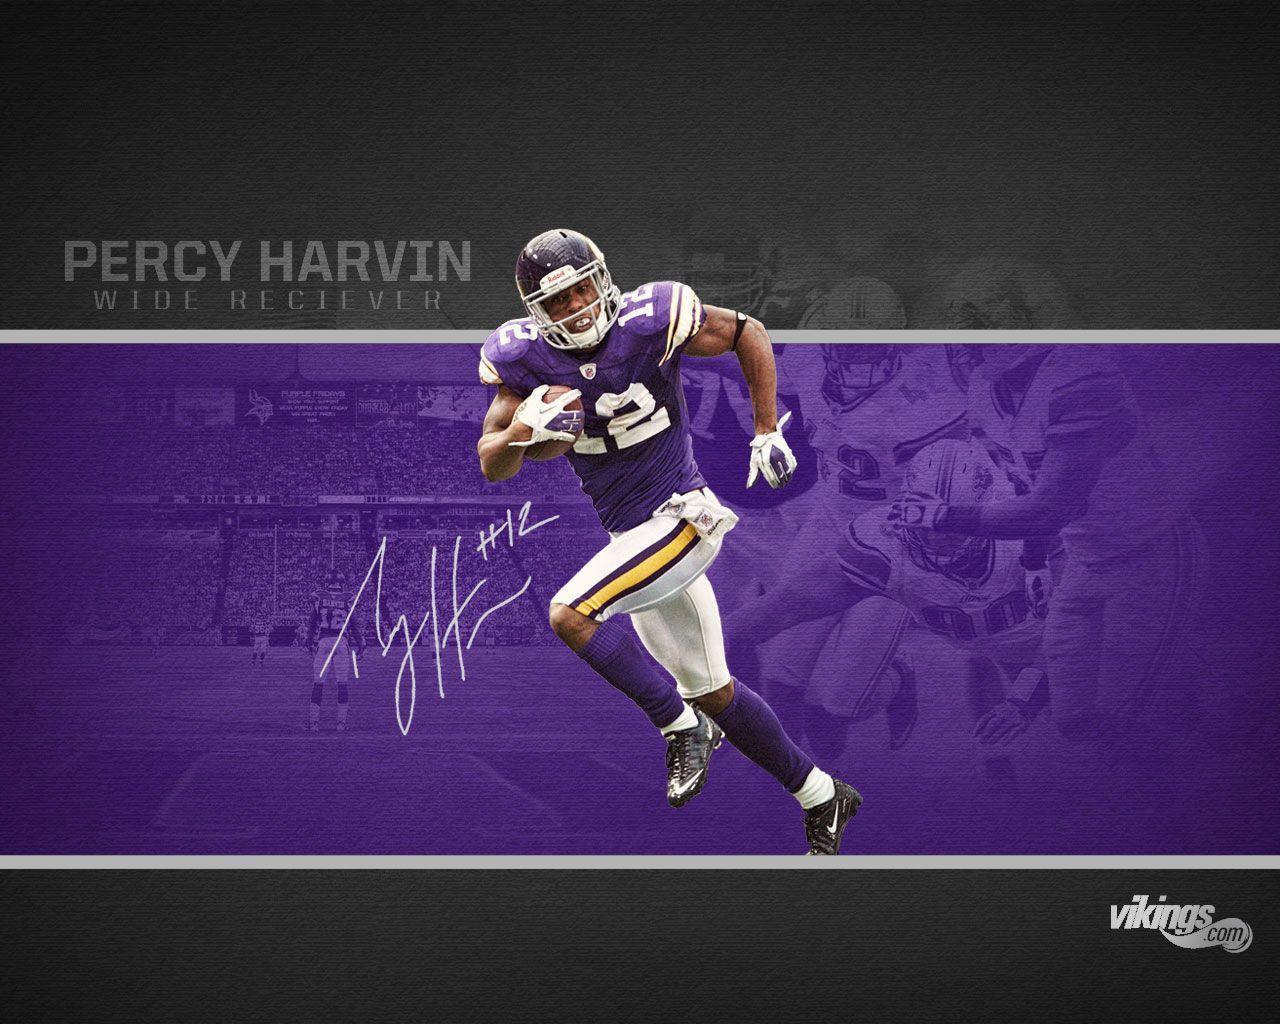 Percy Harvin NFL Football HD Wallpaper For Desktop. Download High